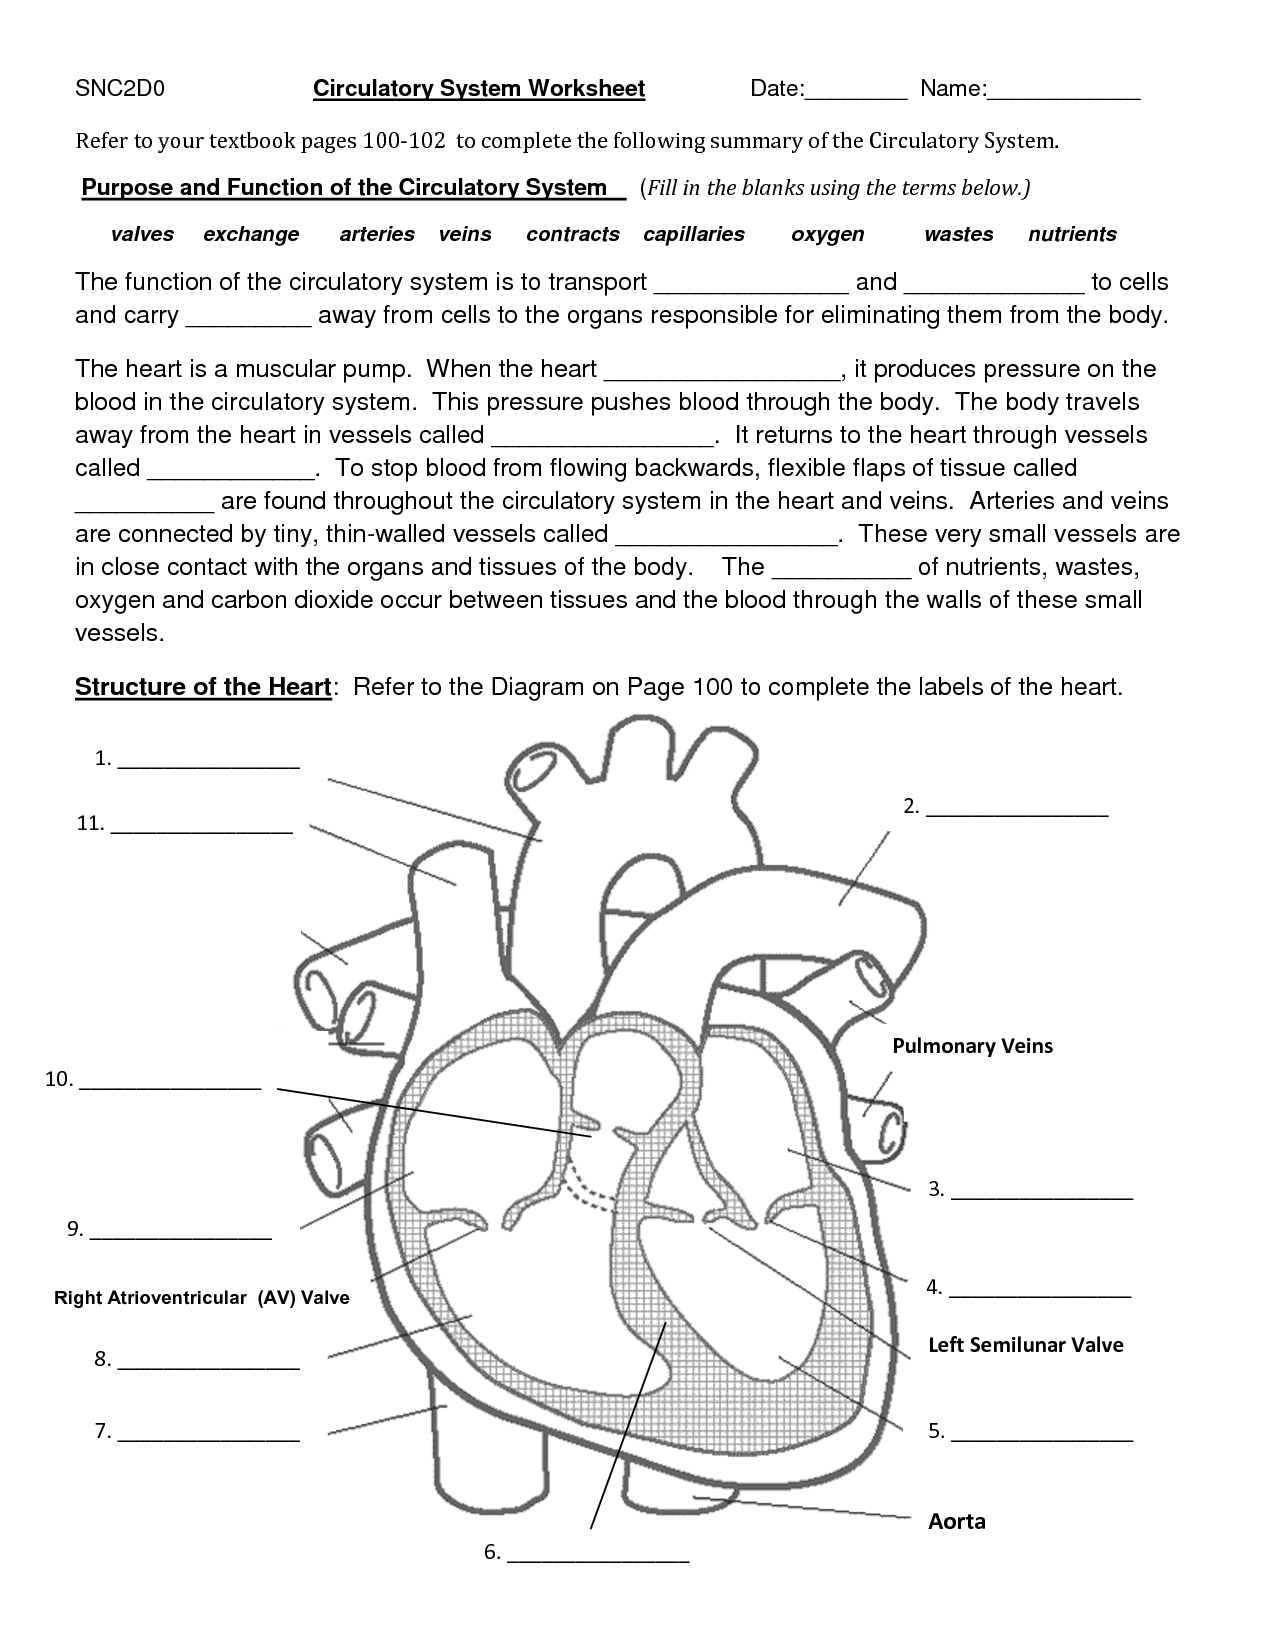 Human Circulatory System Worksheet Answers